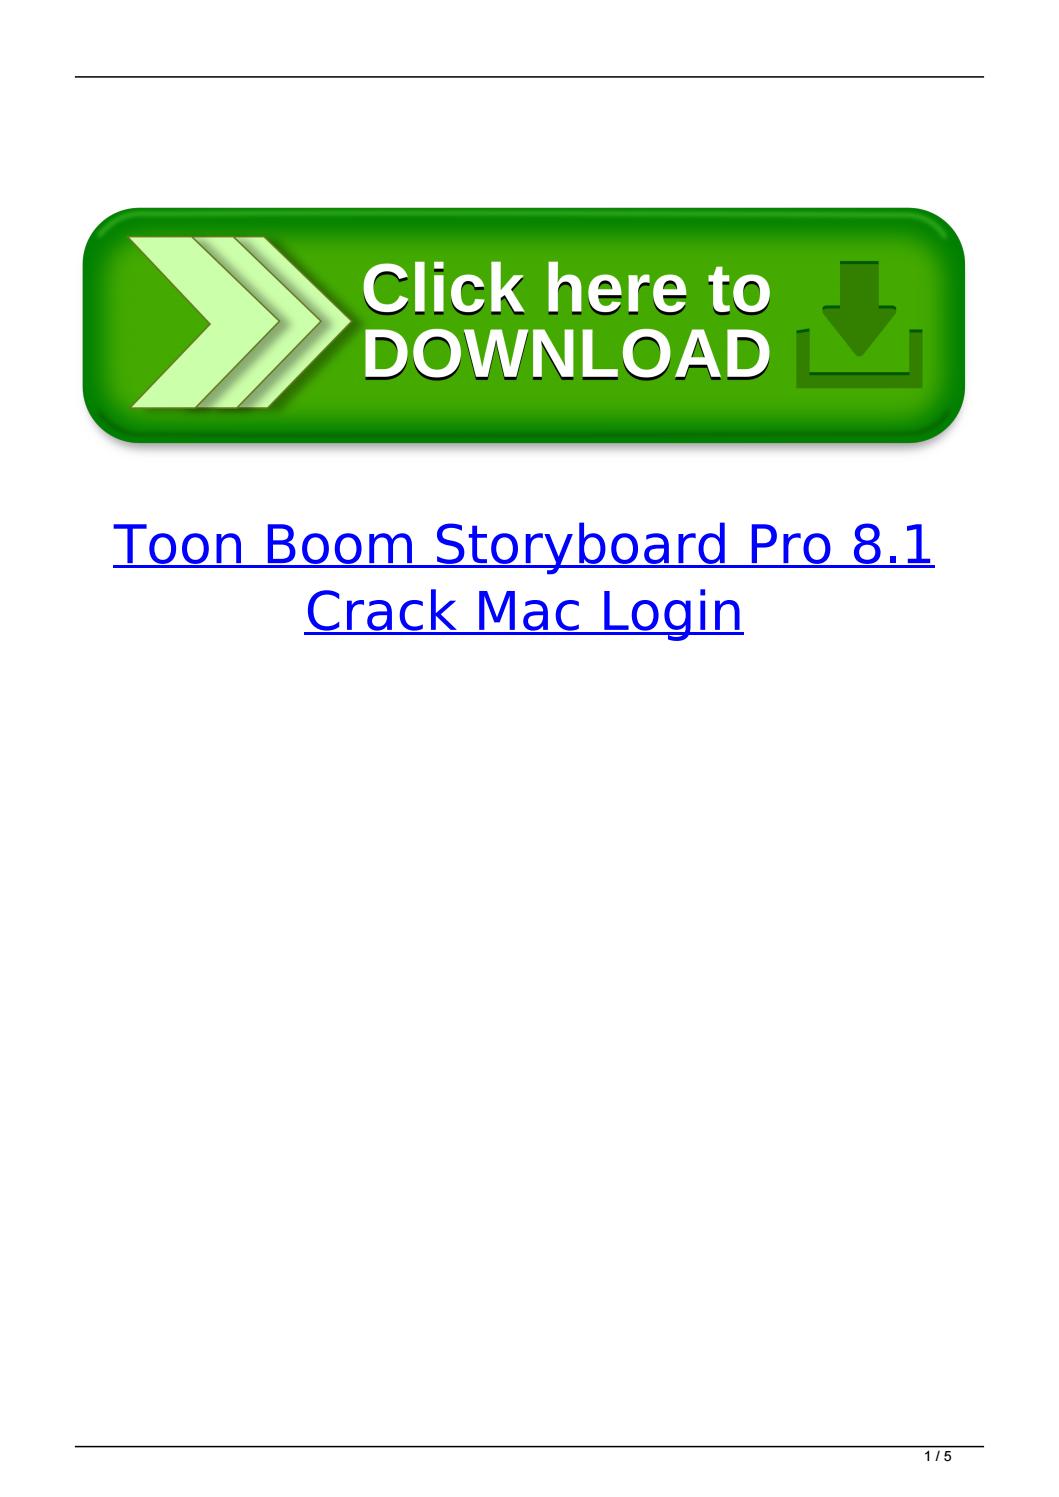 toon boom storyboard pro 4 crack